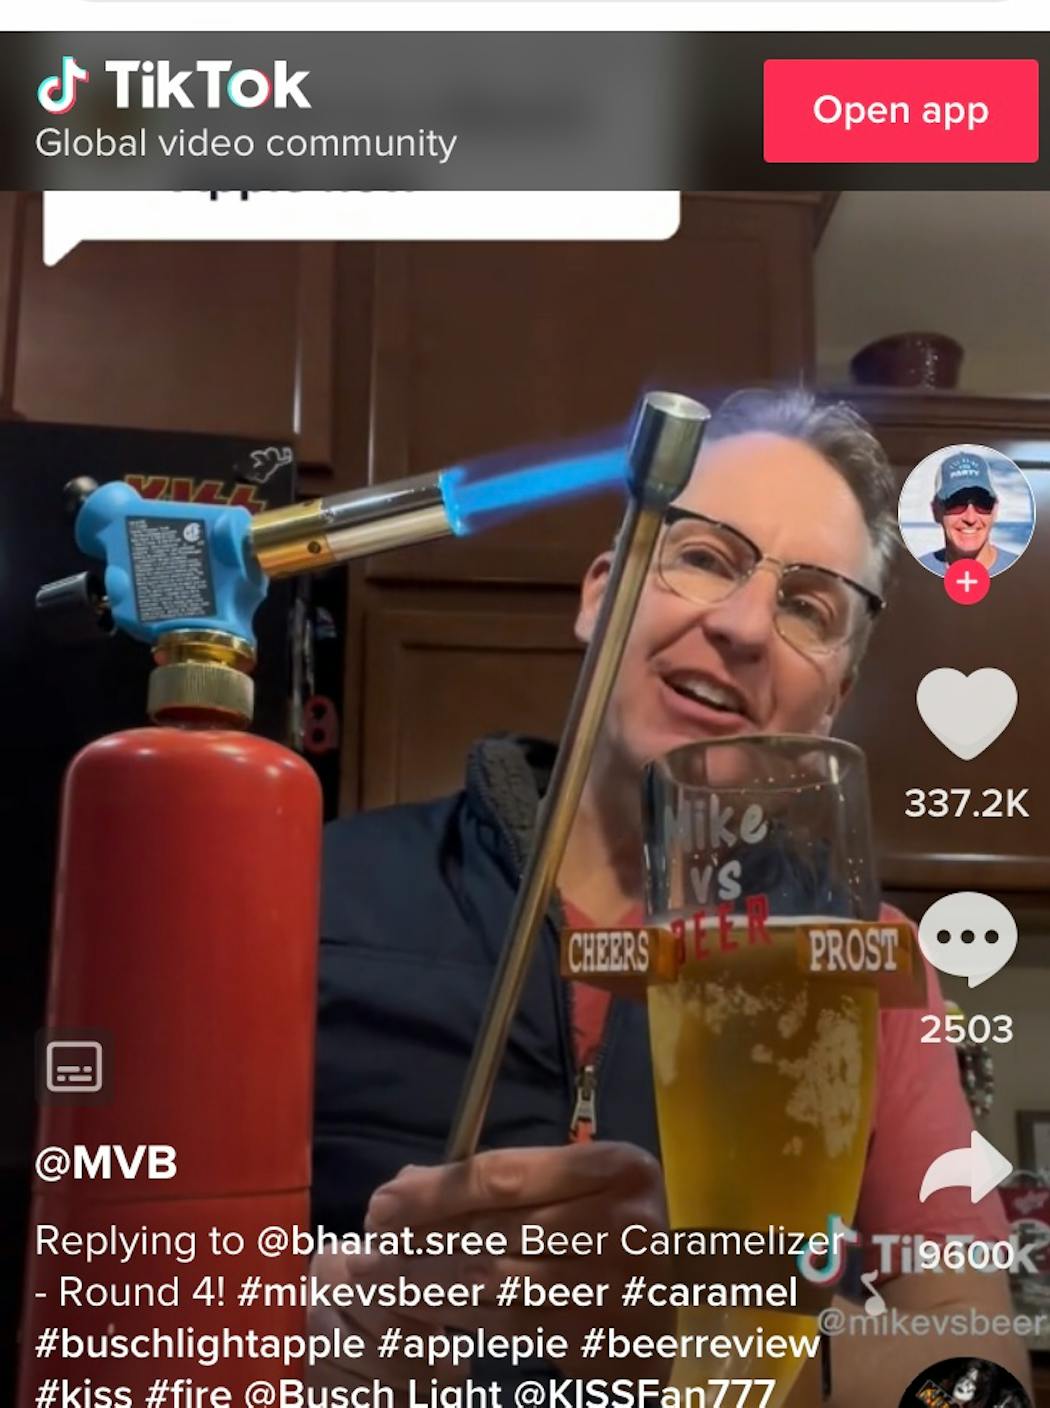 Mike Hartmann heating up a beer caramelizer on TikTok.